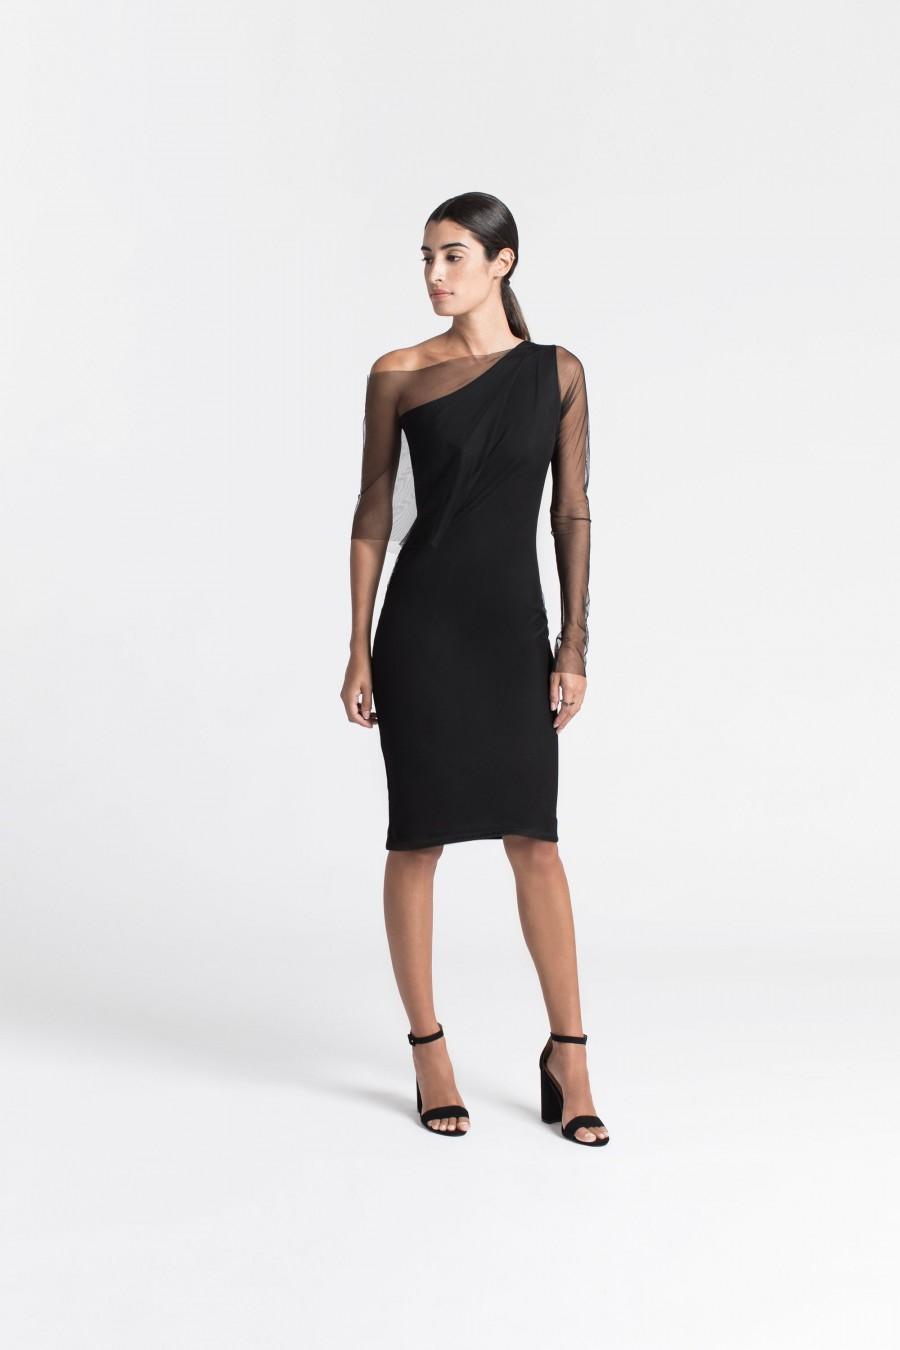 Mariage - NEW Pencil Dress / Black Dress / One Shoulder Dress / Party Dress / Cocktail Dress / Scarlett Dress / Marcellamoda - MD1010